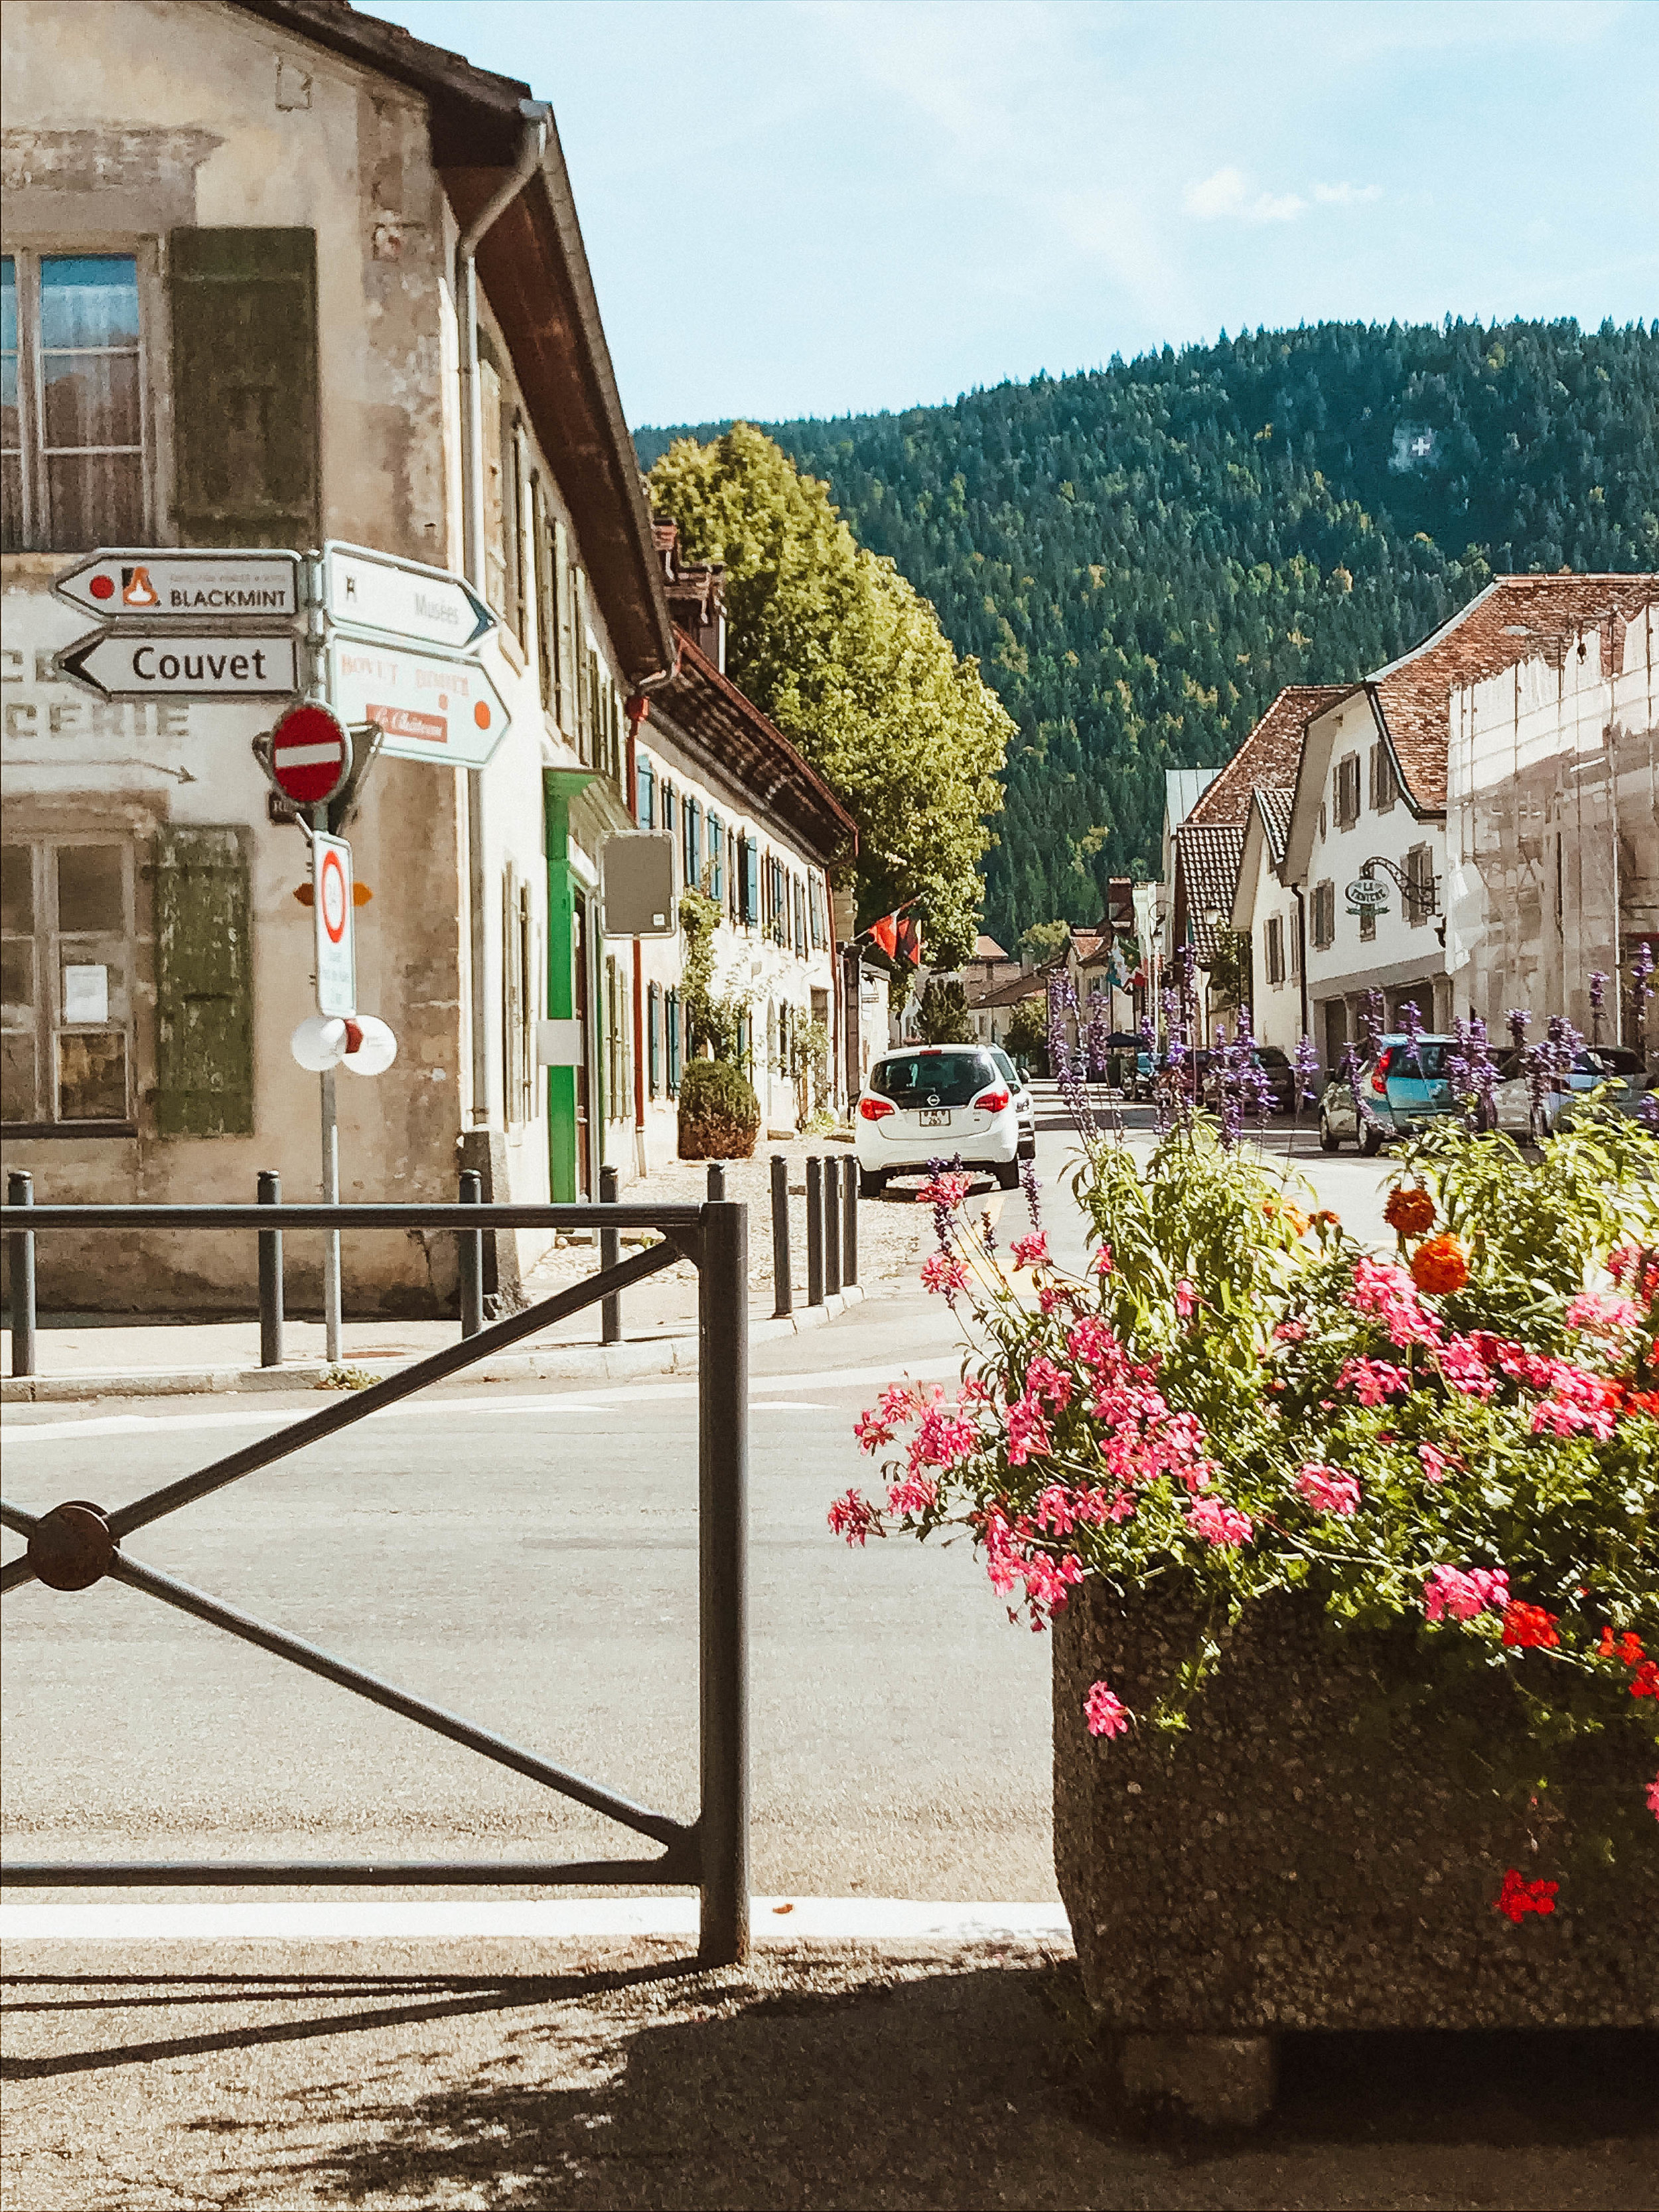 Main street in Motiers, Switzerland